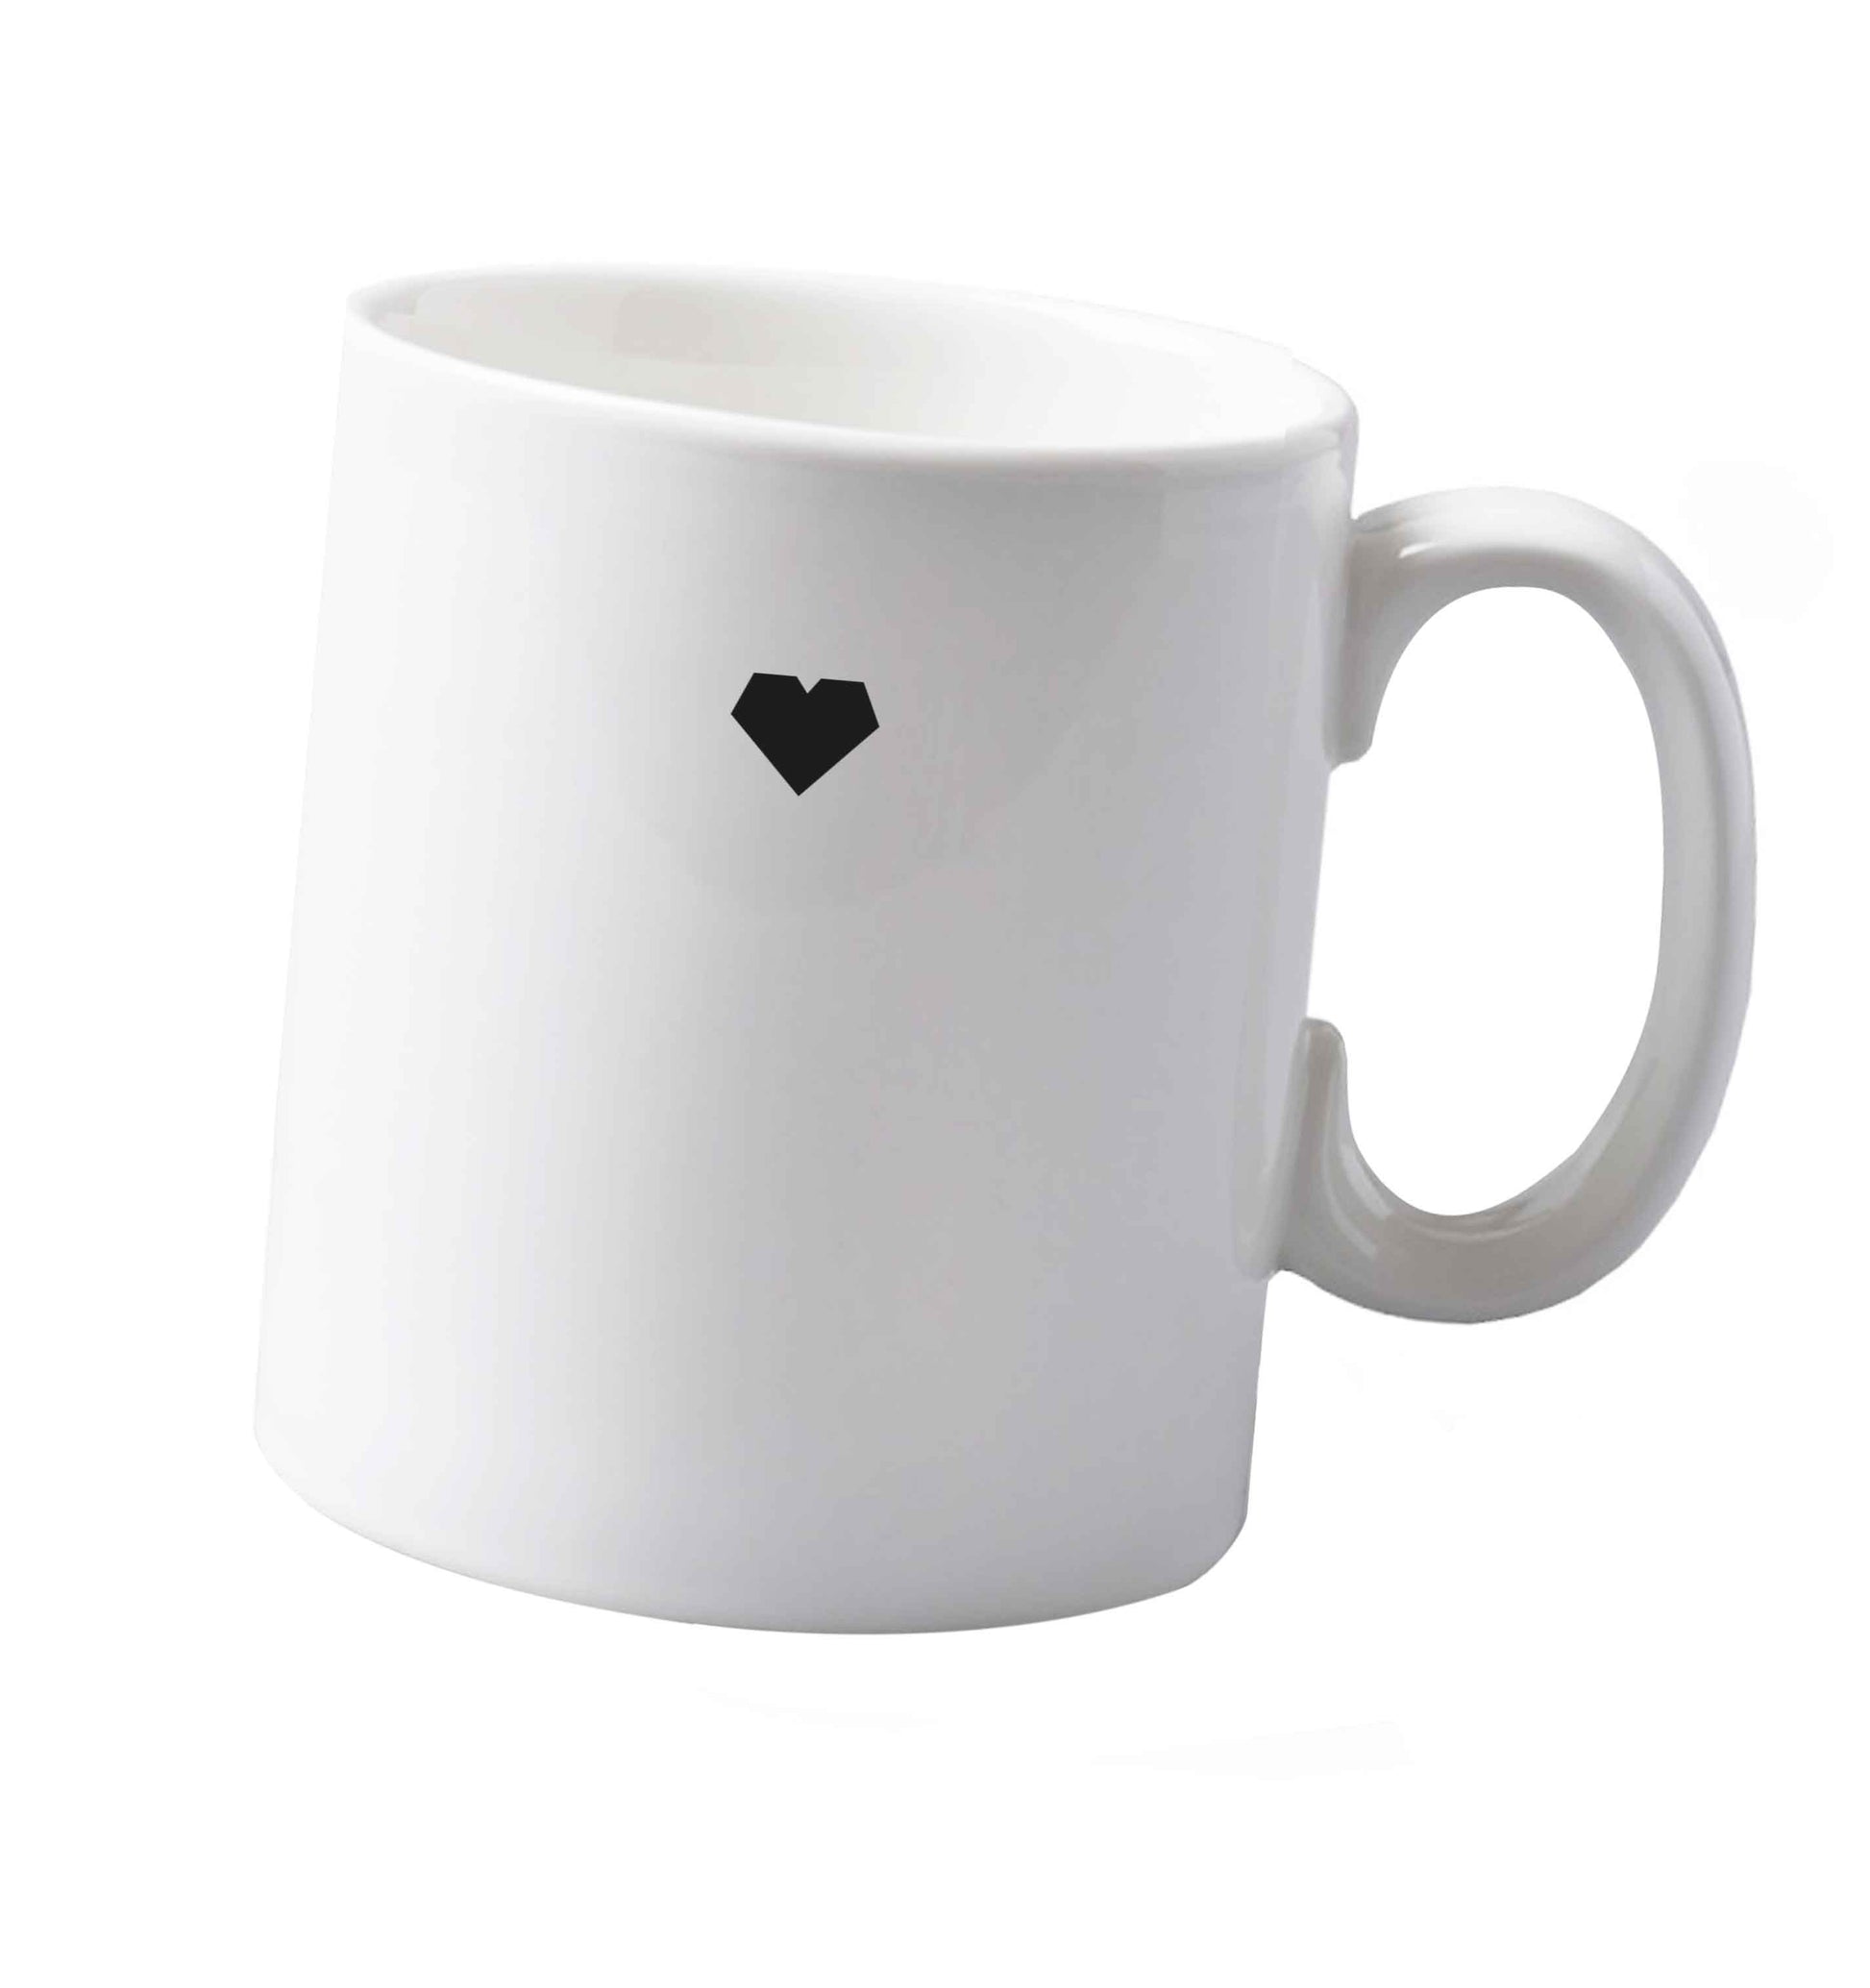 10 oz Tiny heart ceramic mug both sides